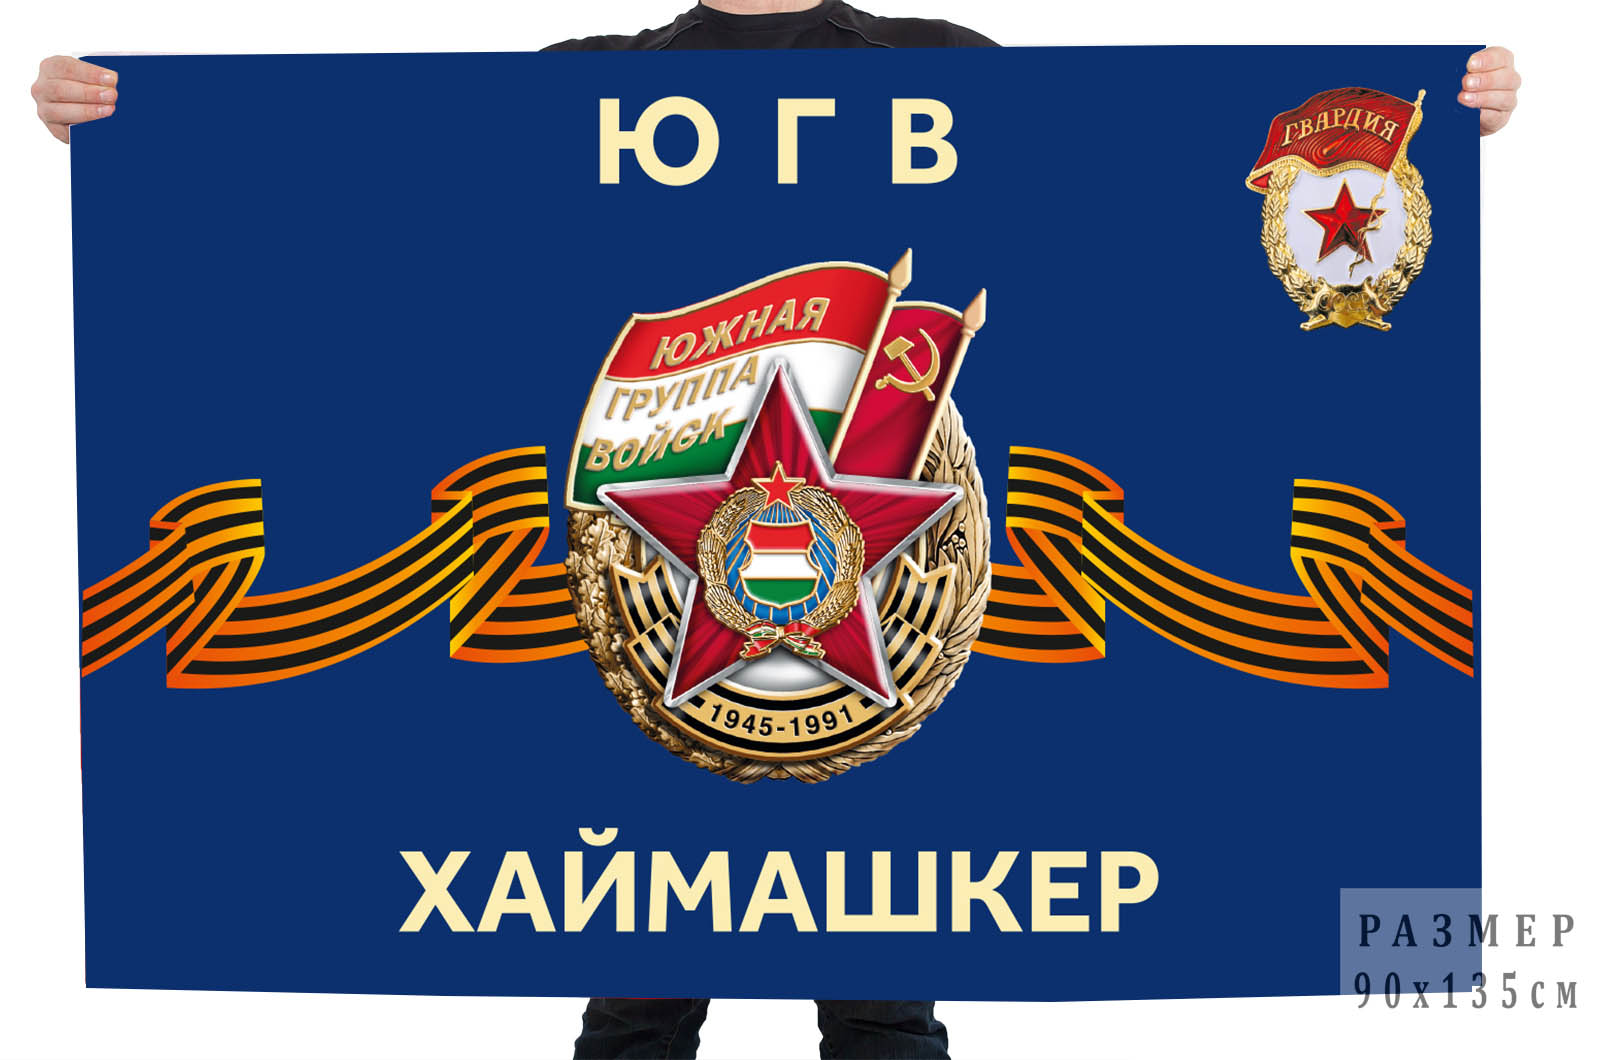 Купить флаг ЮГВ "Хаймашкер"